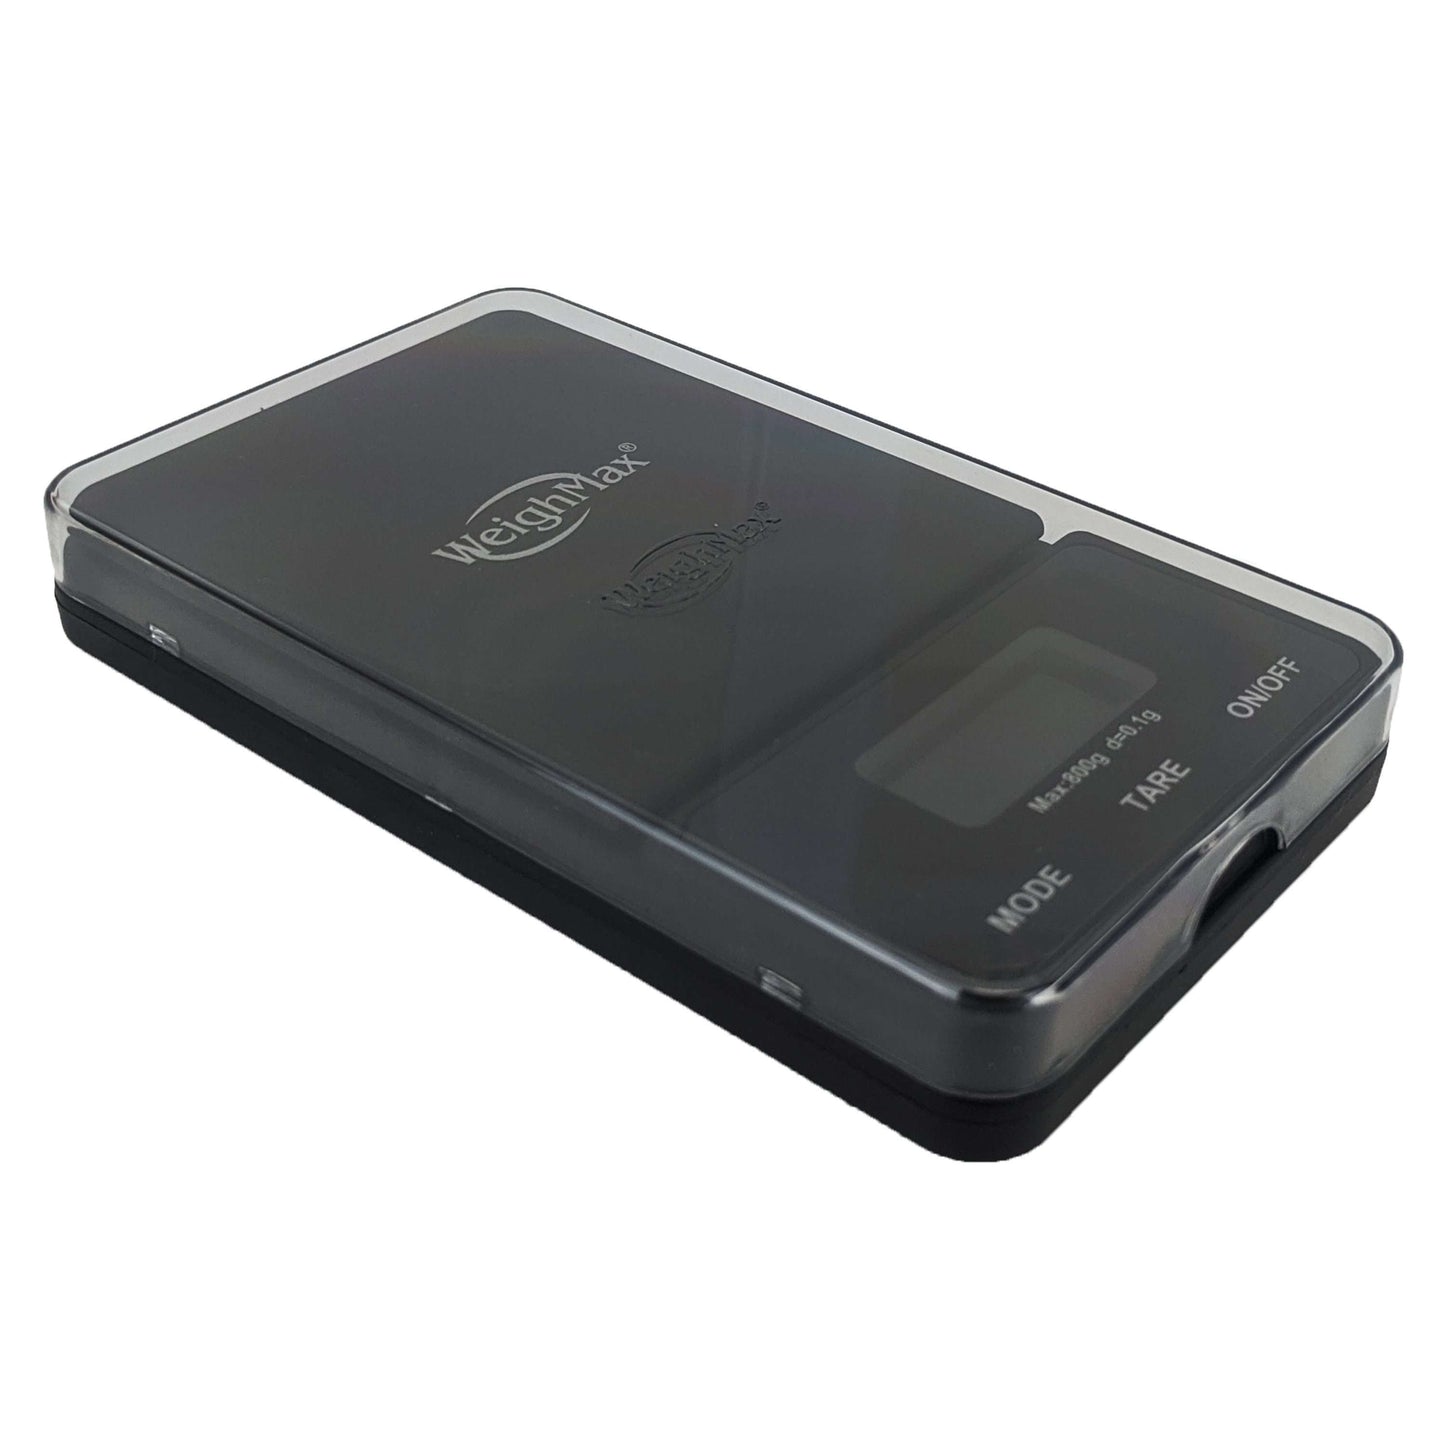 WeighMax Ninja Pocket Scale 800g x 0.1g NJ-800 - Black